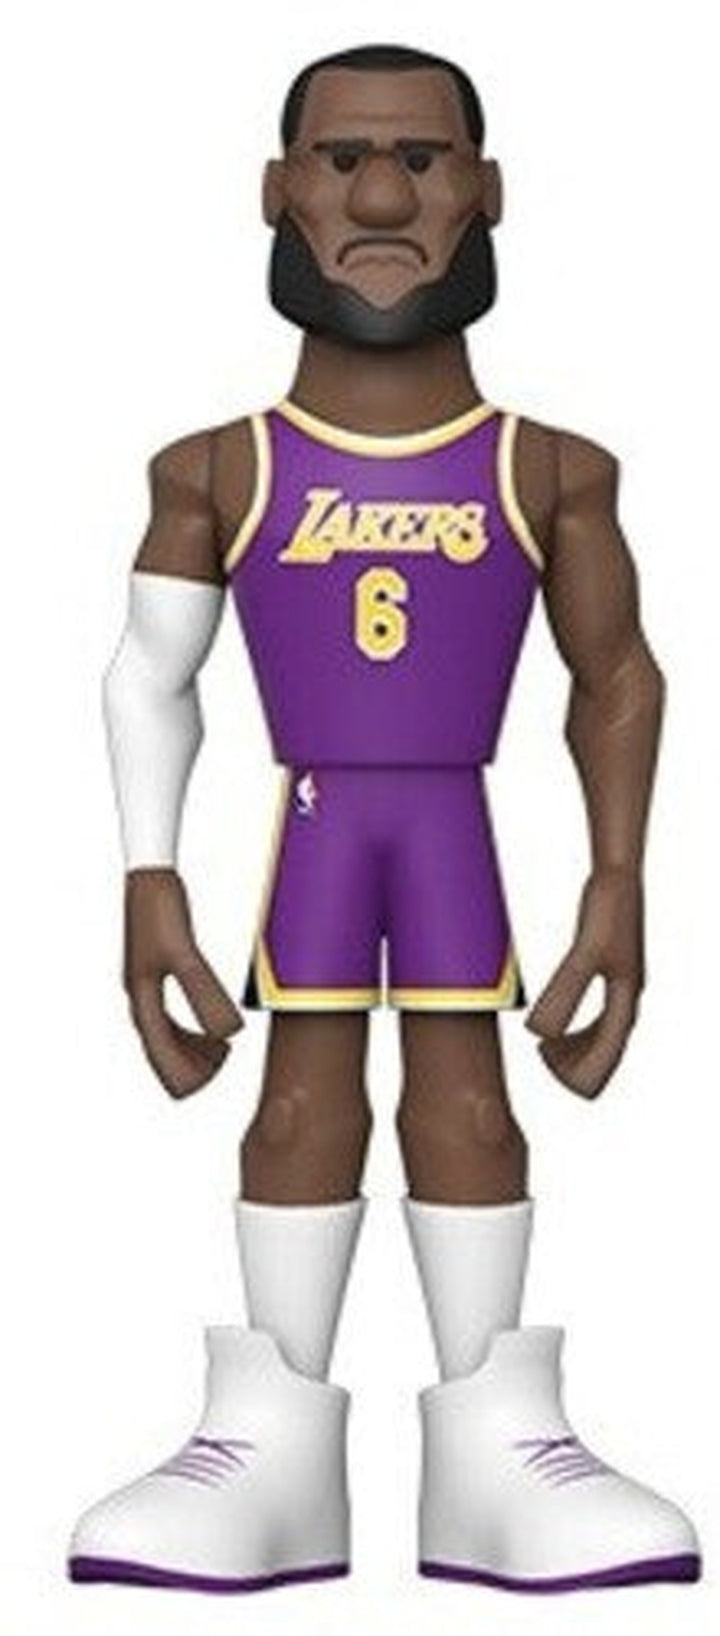 FUNKO GOLD 5 NBA: Lakers - LeBron James (City Uniform)